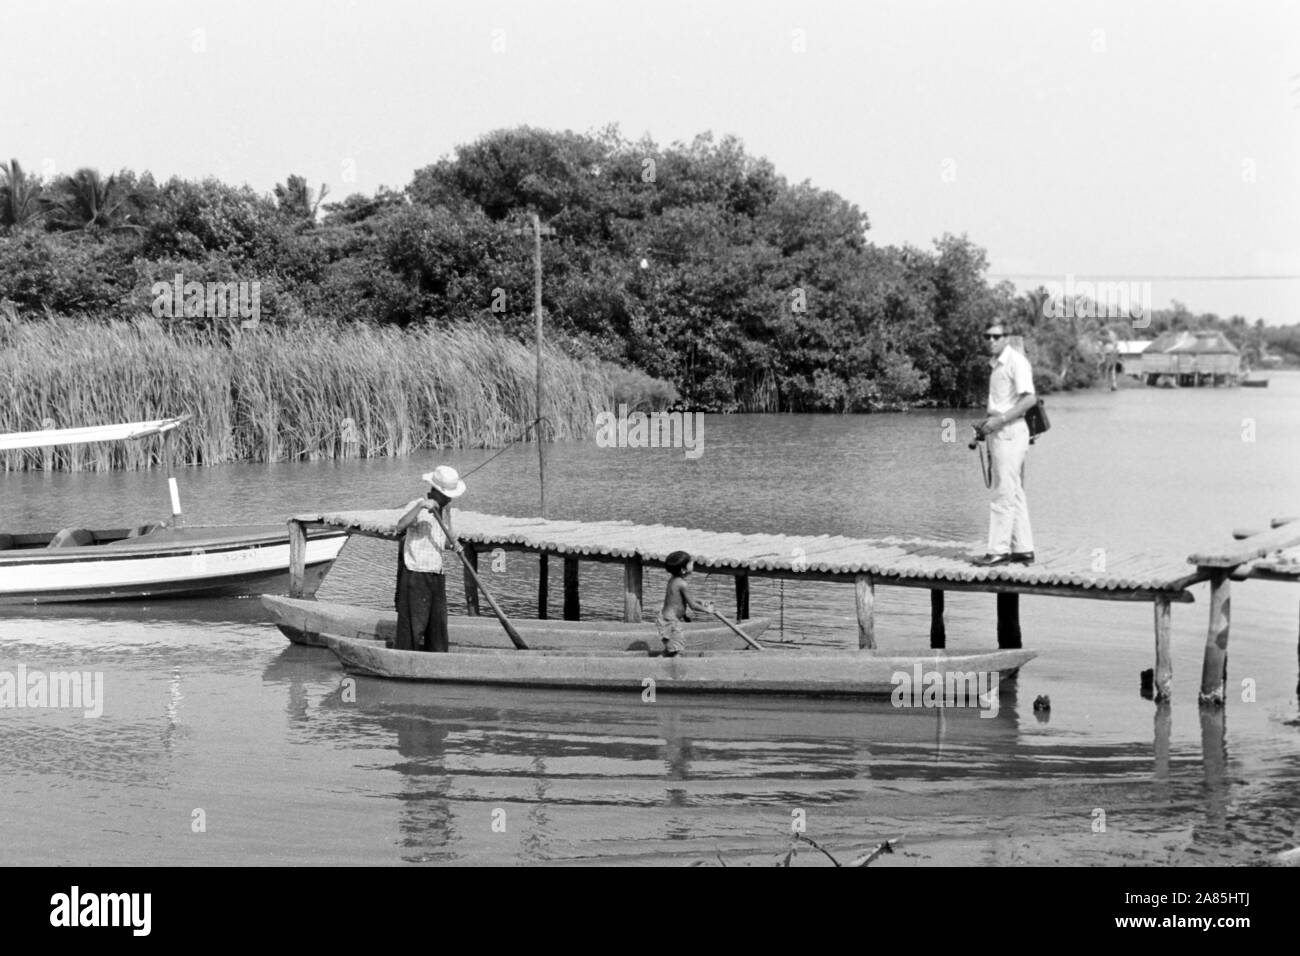 Laguna de Sinamaica am Maracaibo-See, Venezuela, 1960 er. Laguna de Sinamaica au Lac Maracaibo, Venezuela, 1960. Banque D'Images